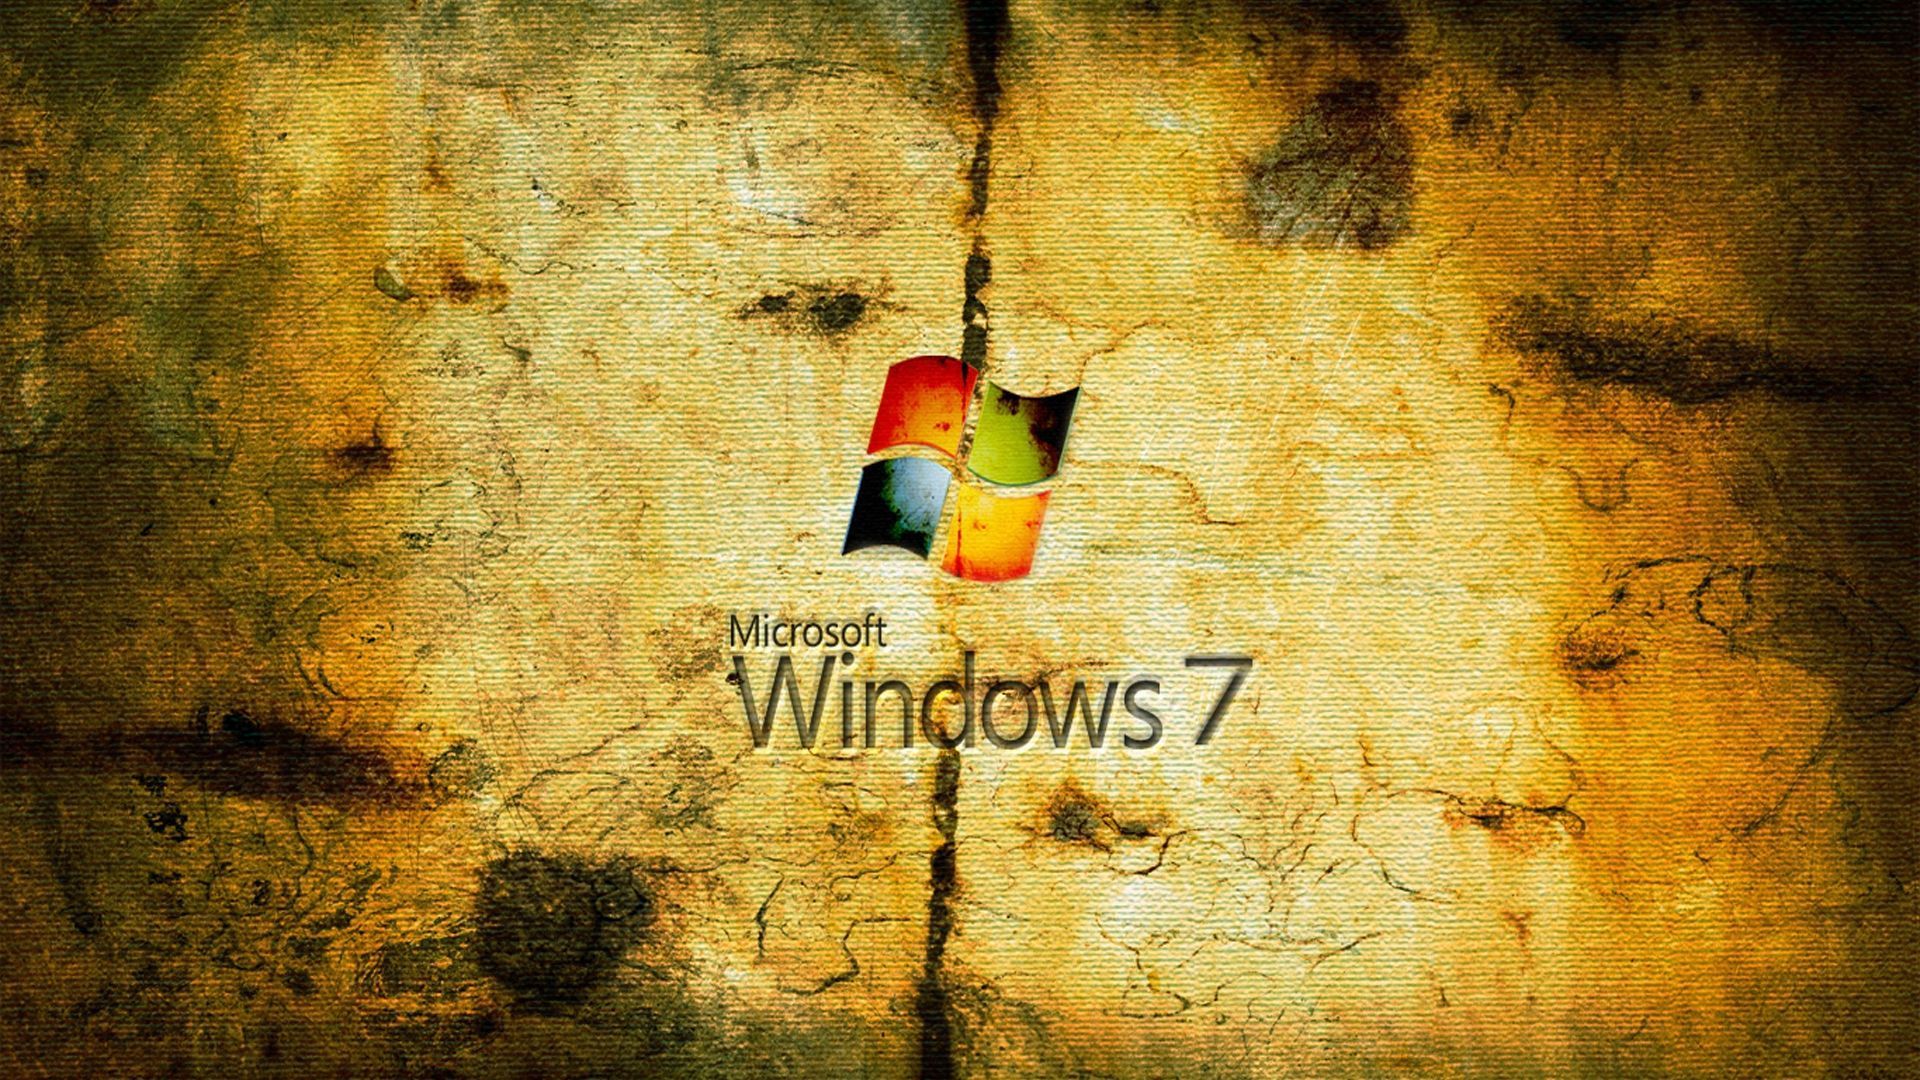 Worn Windows 7 Wallpaper - HD Wallpapers